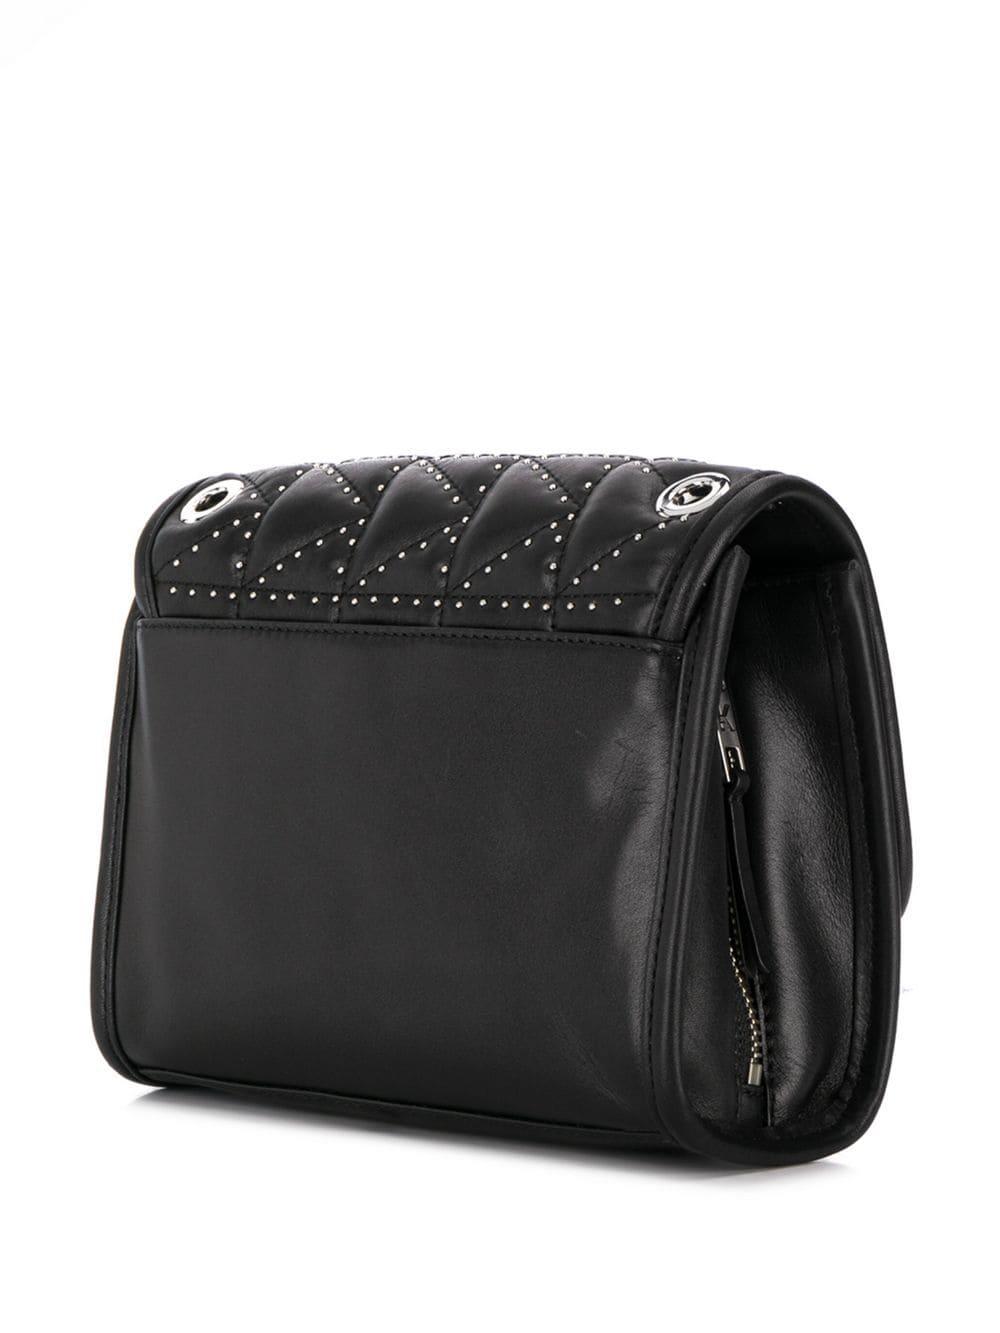 Karl Lagerfeld K/kuilted Studs Small Shoulder Bag in Black - Lyst